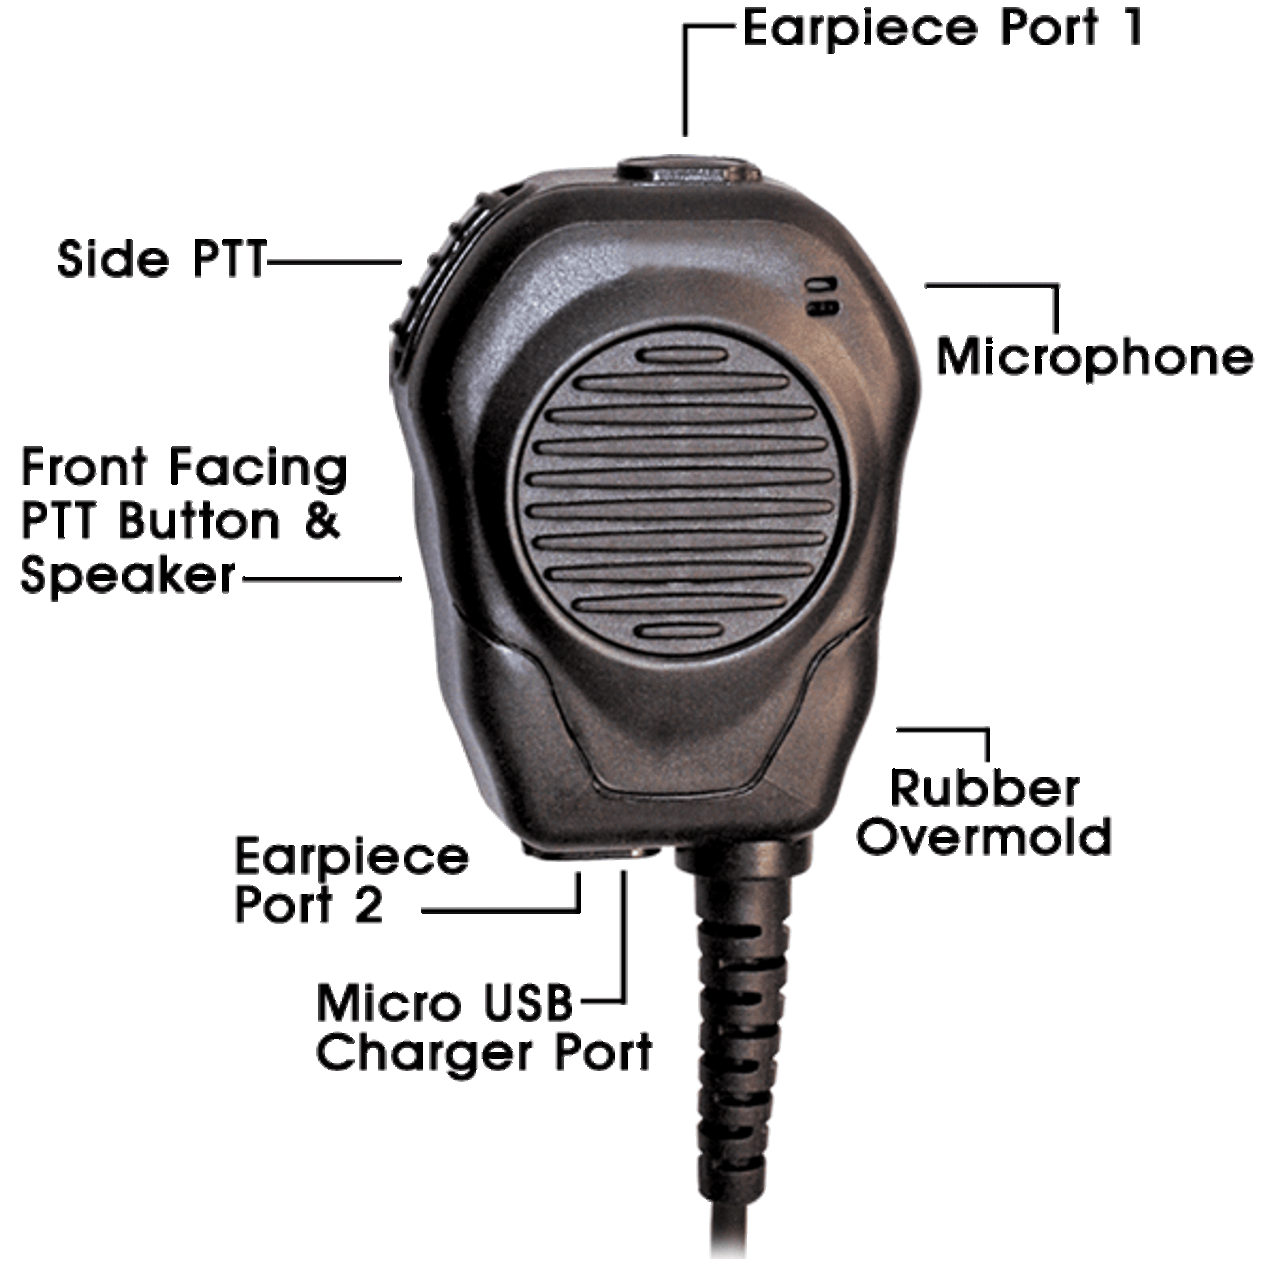 VALOR Speaker / Mic for 3.5mm Pin - Motorola [[product_type]] kleinelectronics.com 134.95